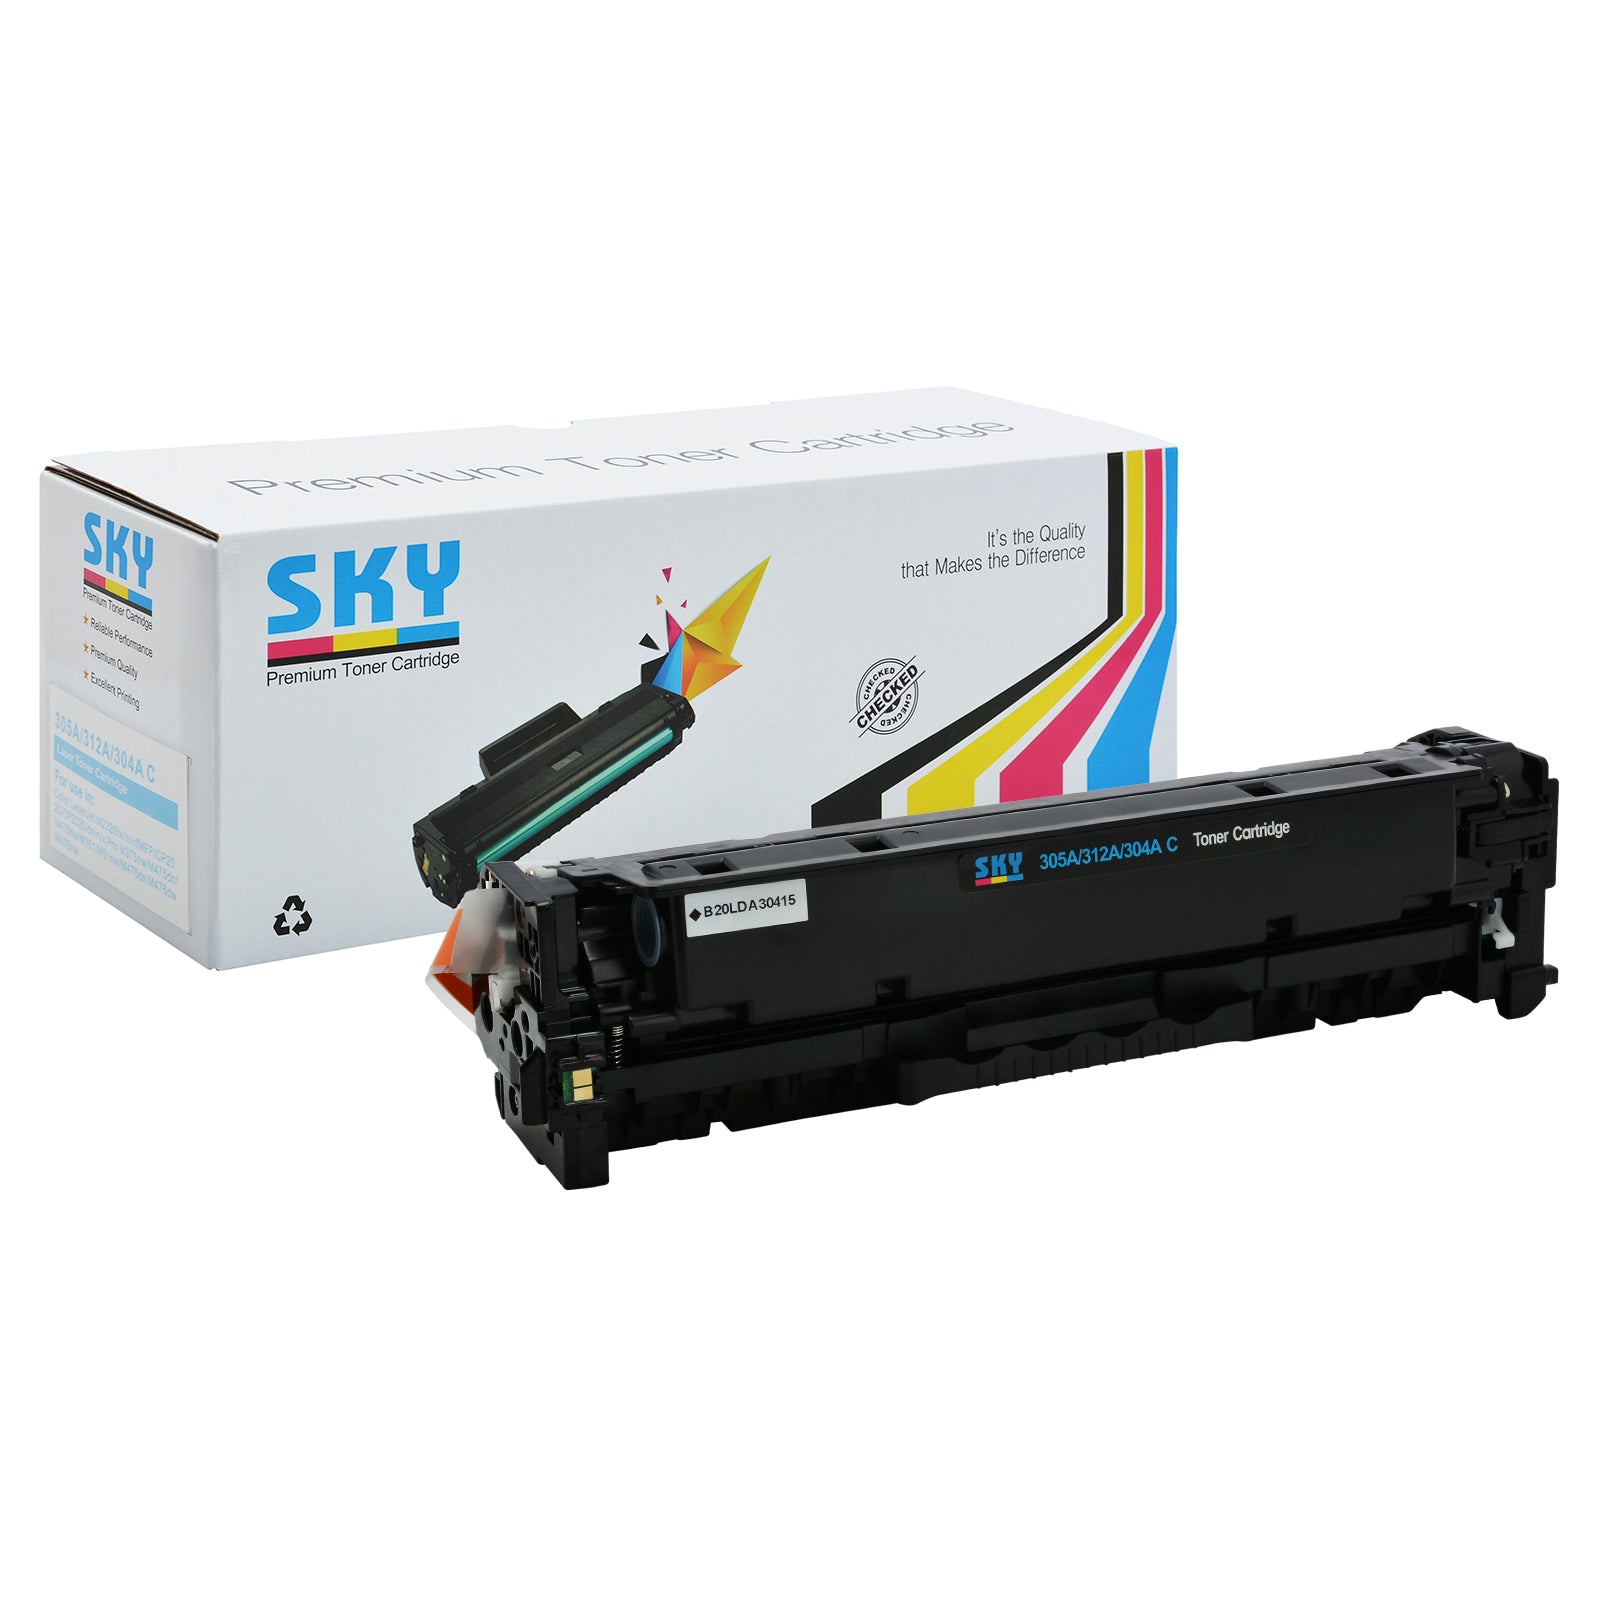 SKY 312A Compatible Toner Cartridge for HP Color LaserJet Pro M476